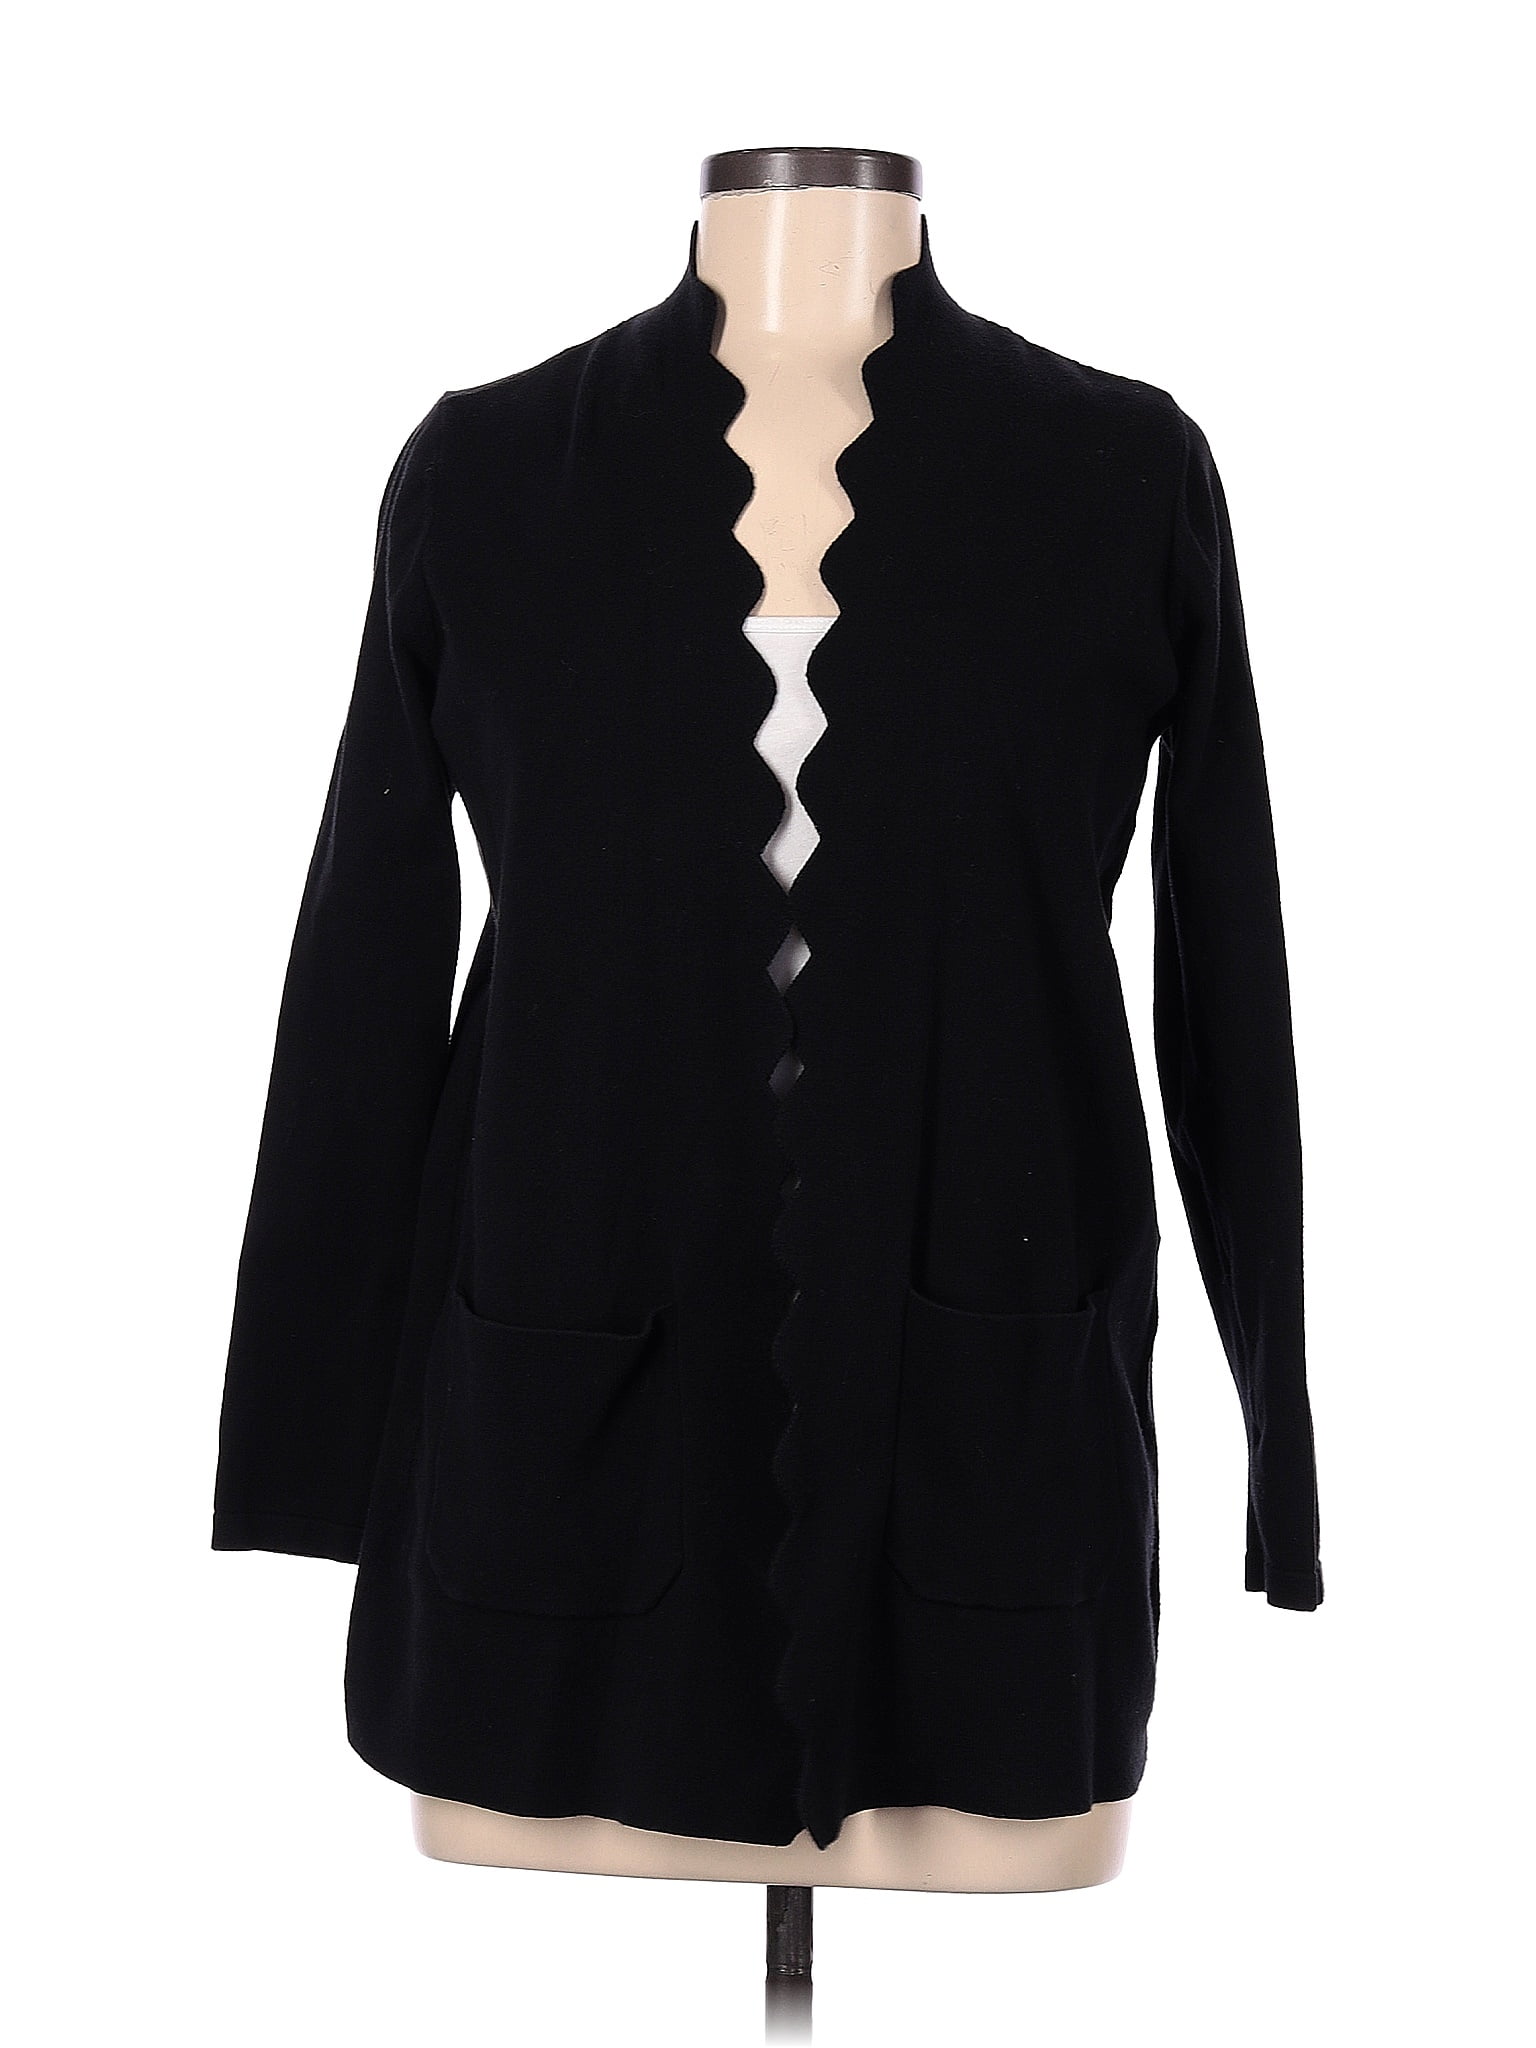 Ann Taylor Factory Solid Black Blazer Size M (Petite) - 54% off | thredUP